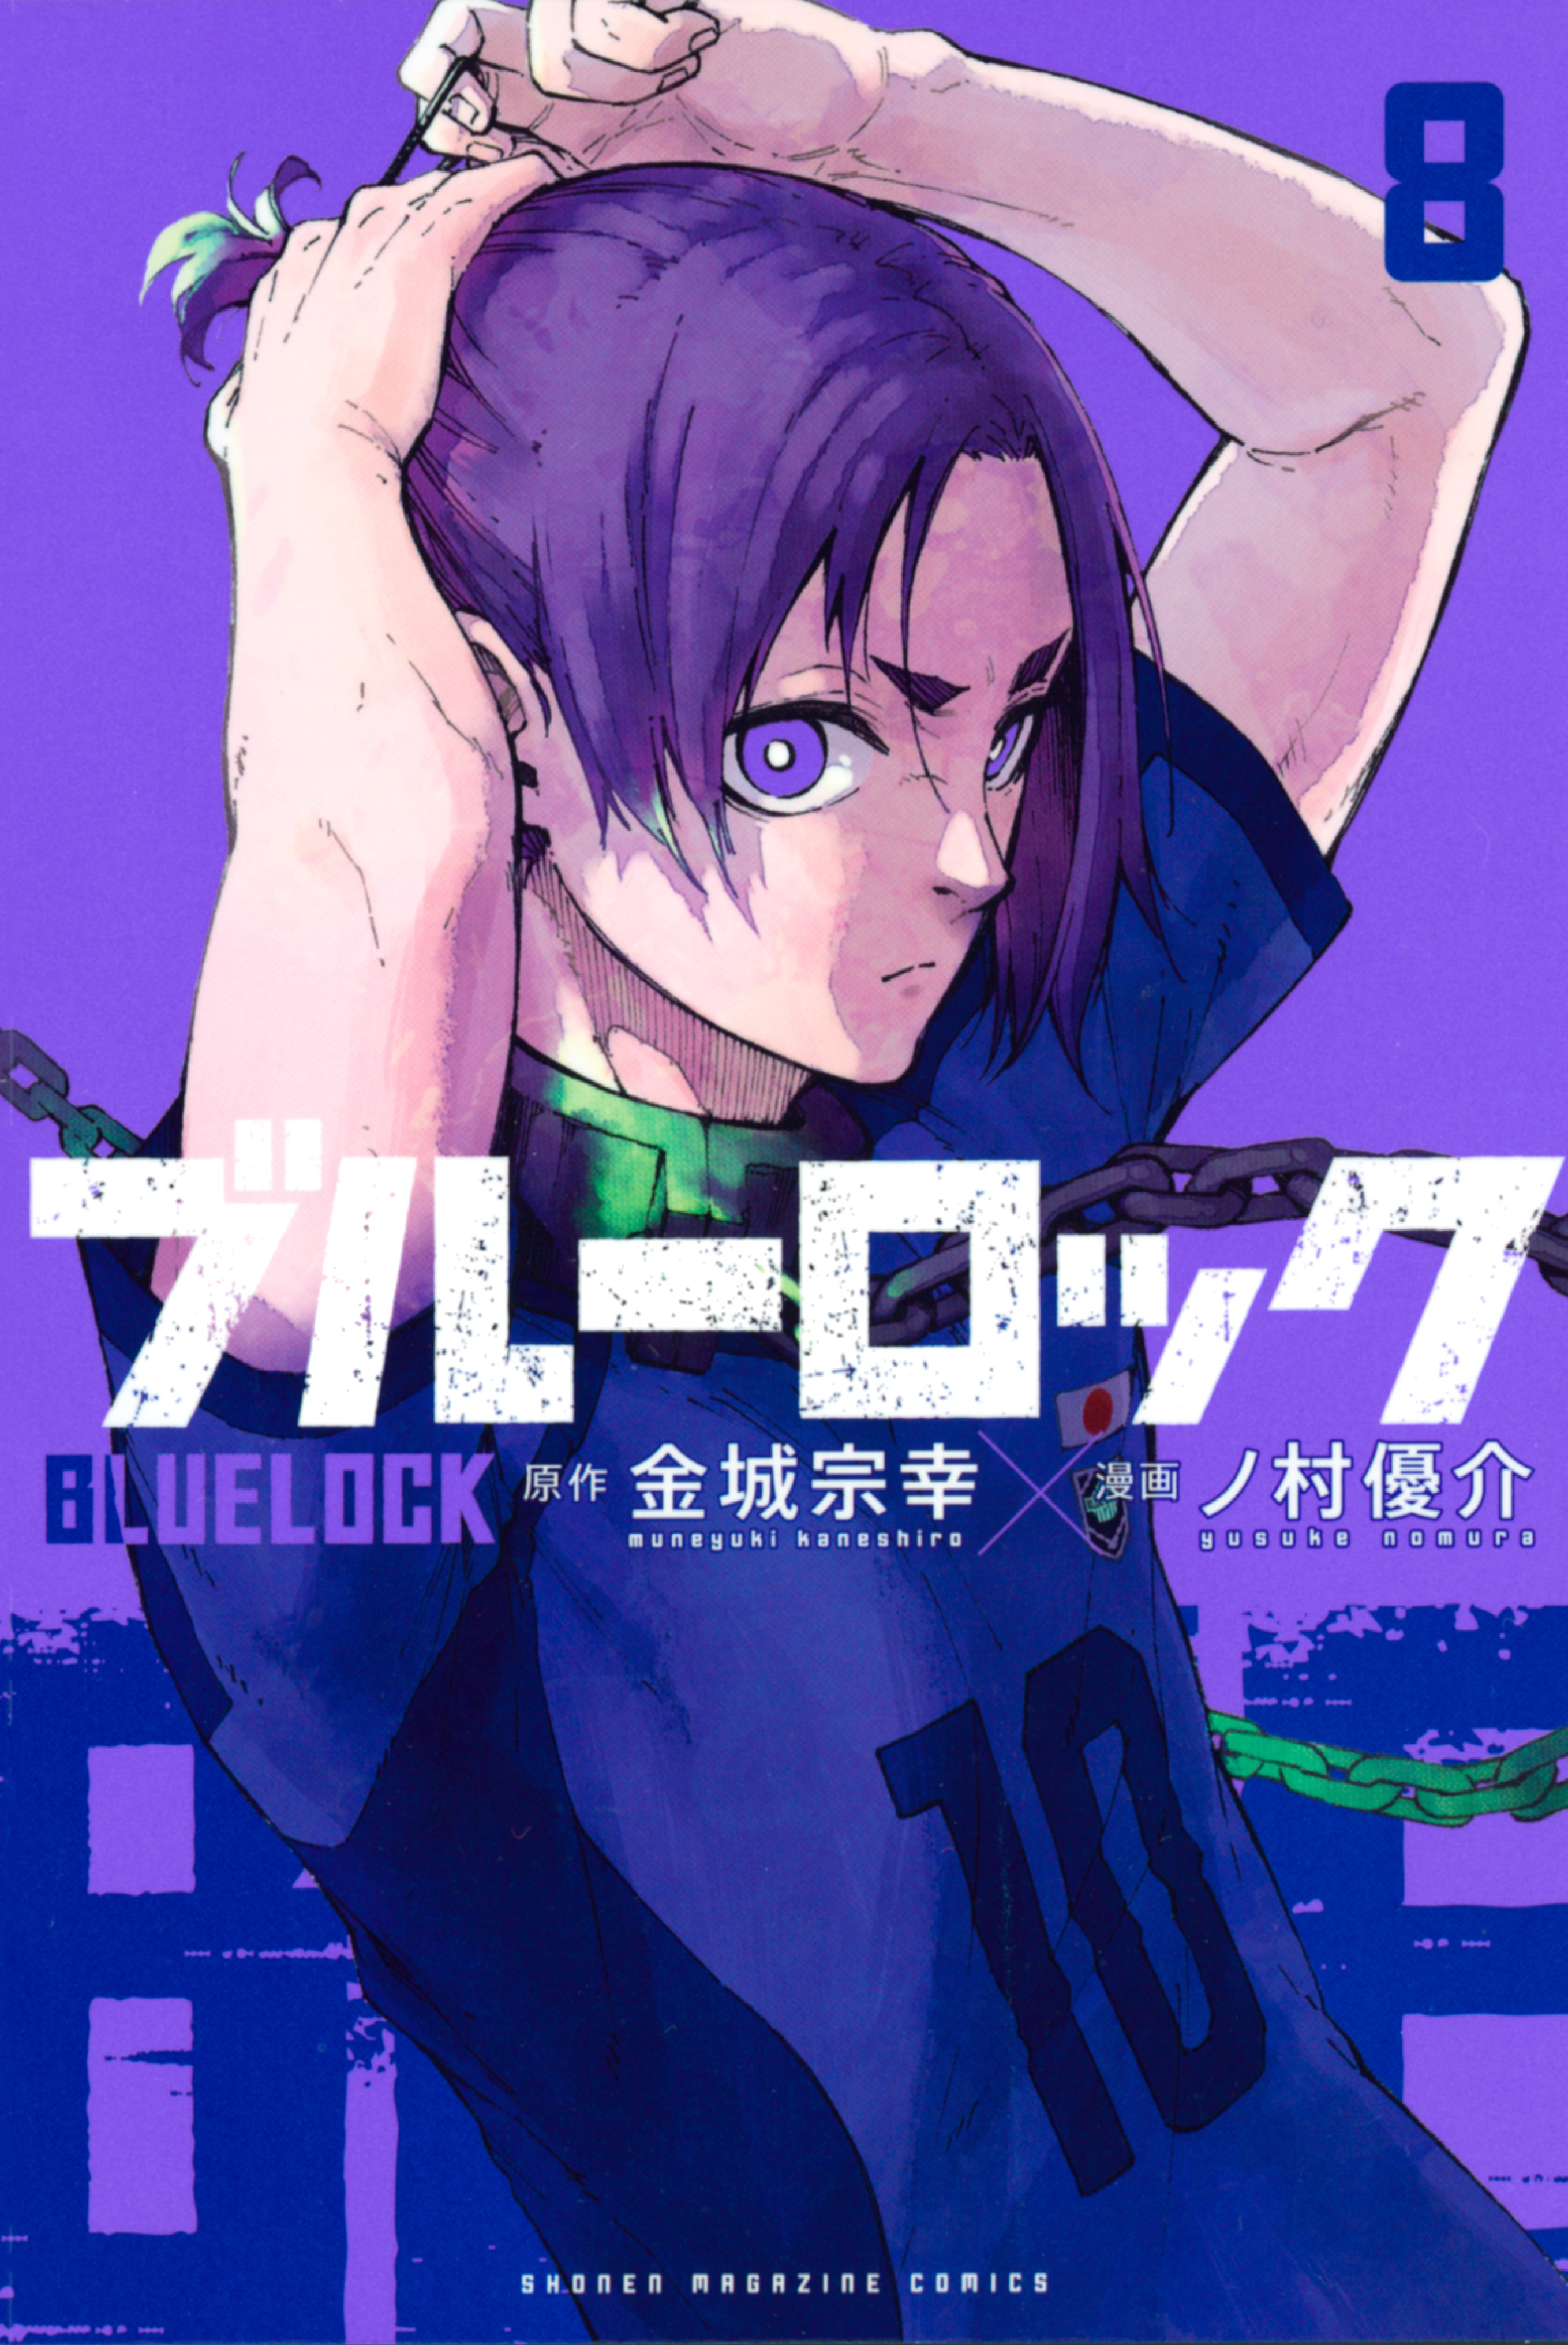 Mikage Reo Lock Anime Image Board